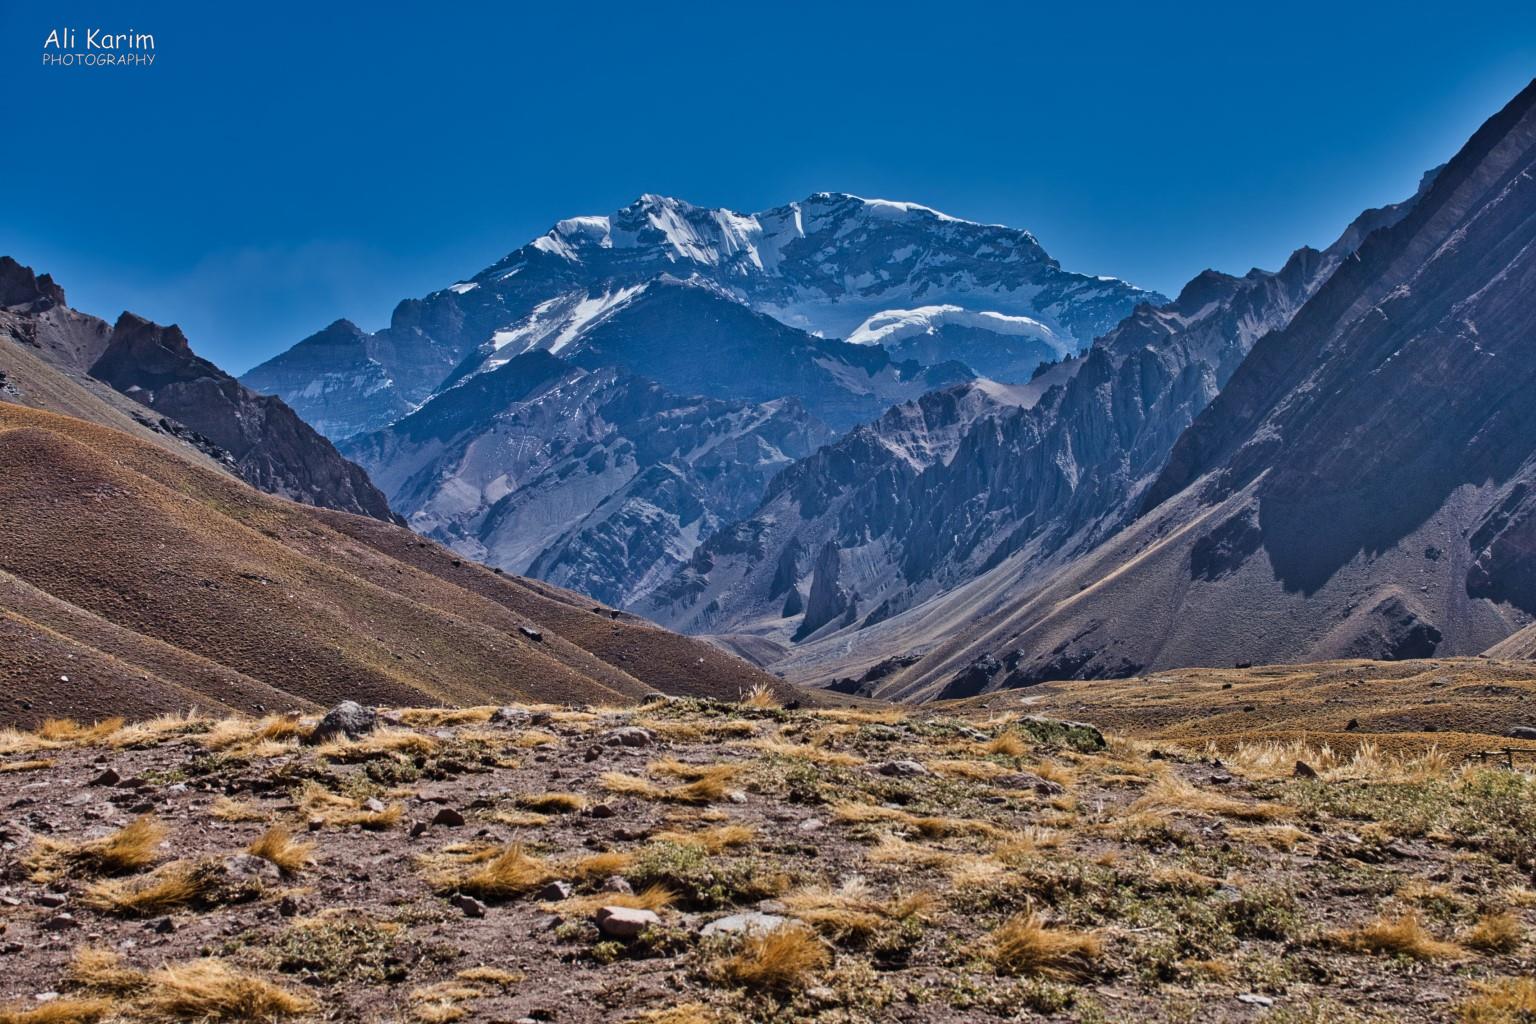 More Mendoza, Argentina Beautiful Aconcagua mountain, with U shaped glacial valleys